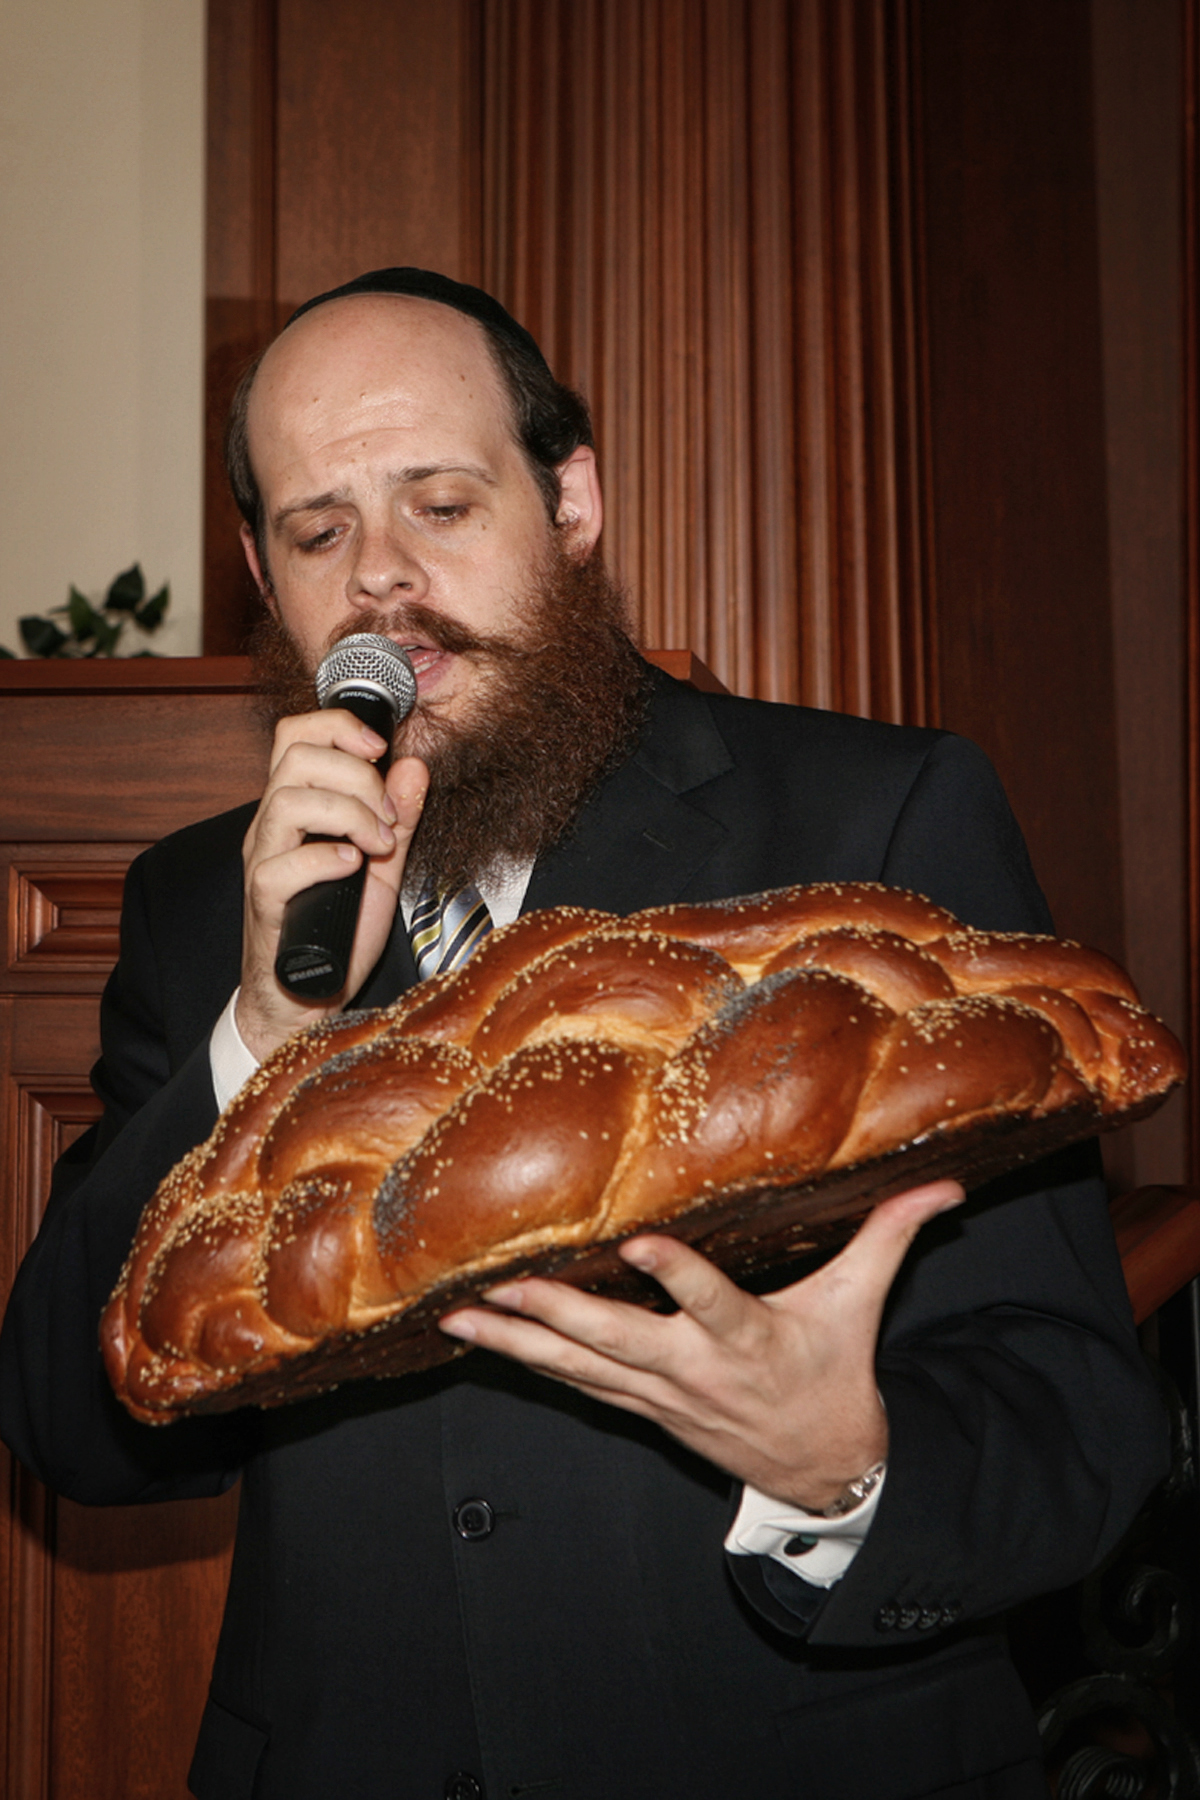 03-rabbi-challah bread-orlando-maitland-photographer.JPG